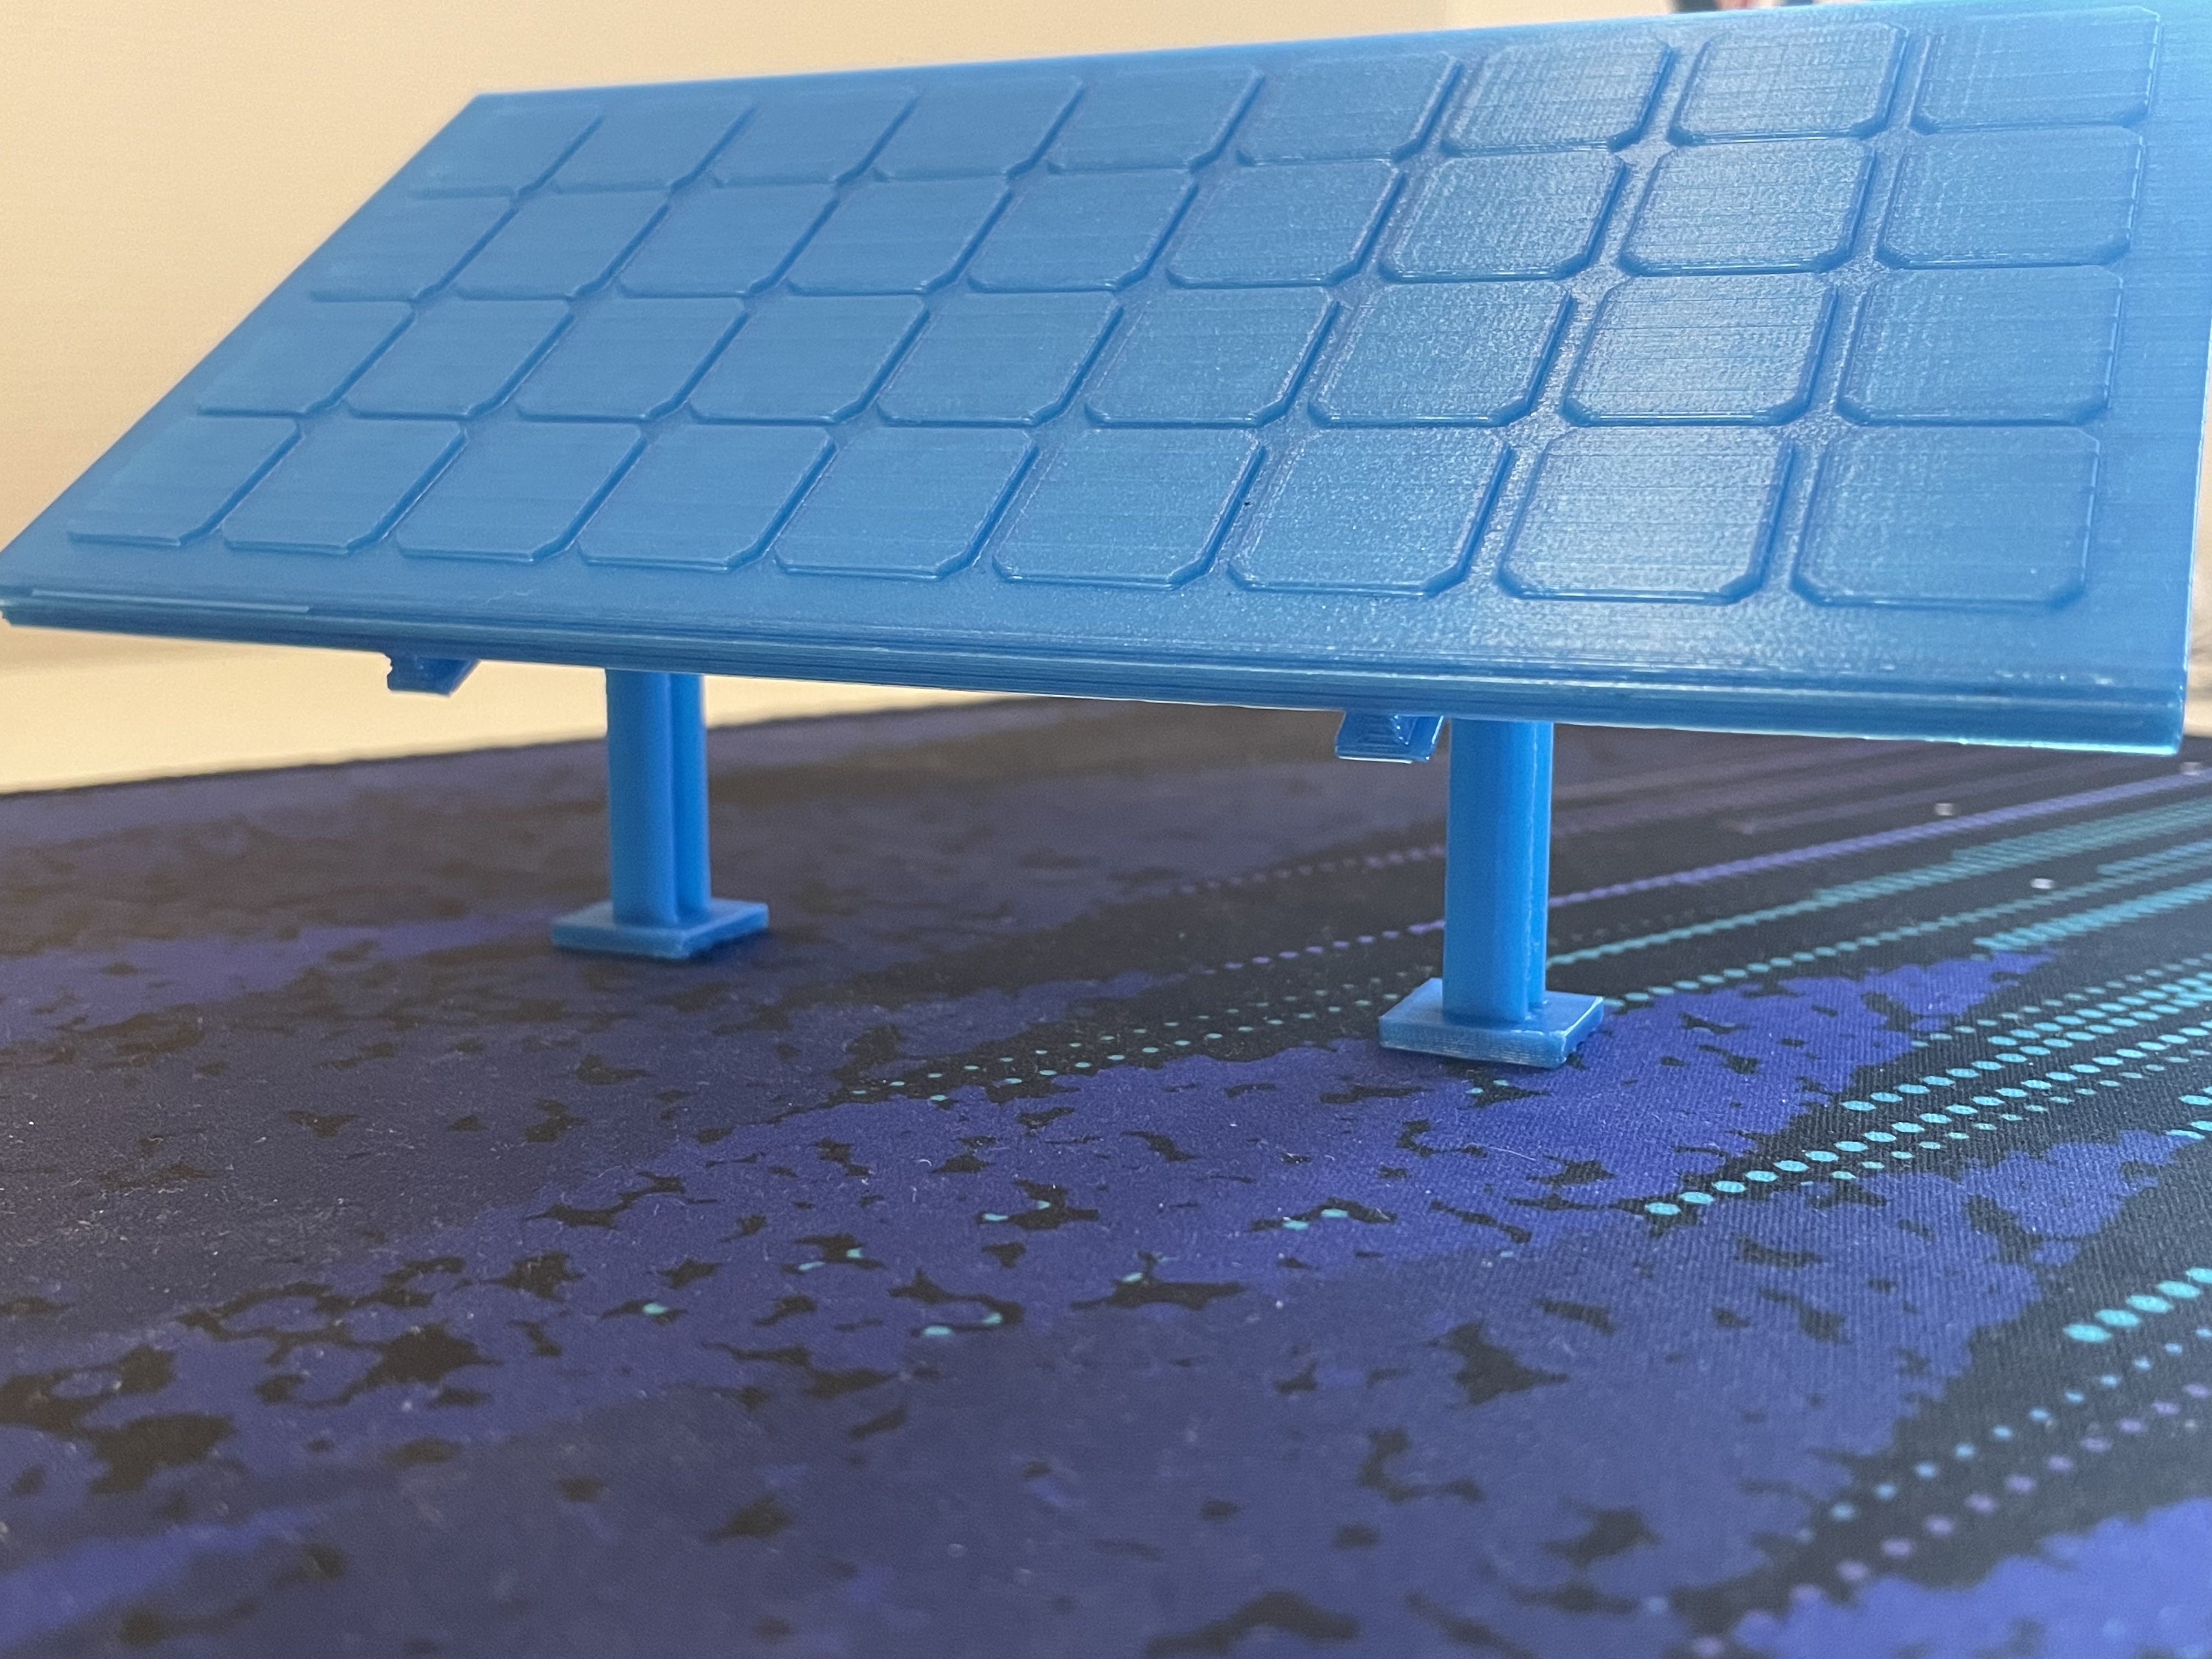 Solar panel model